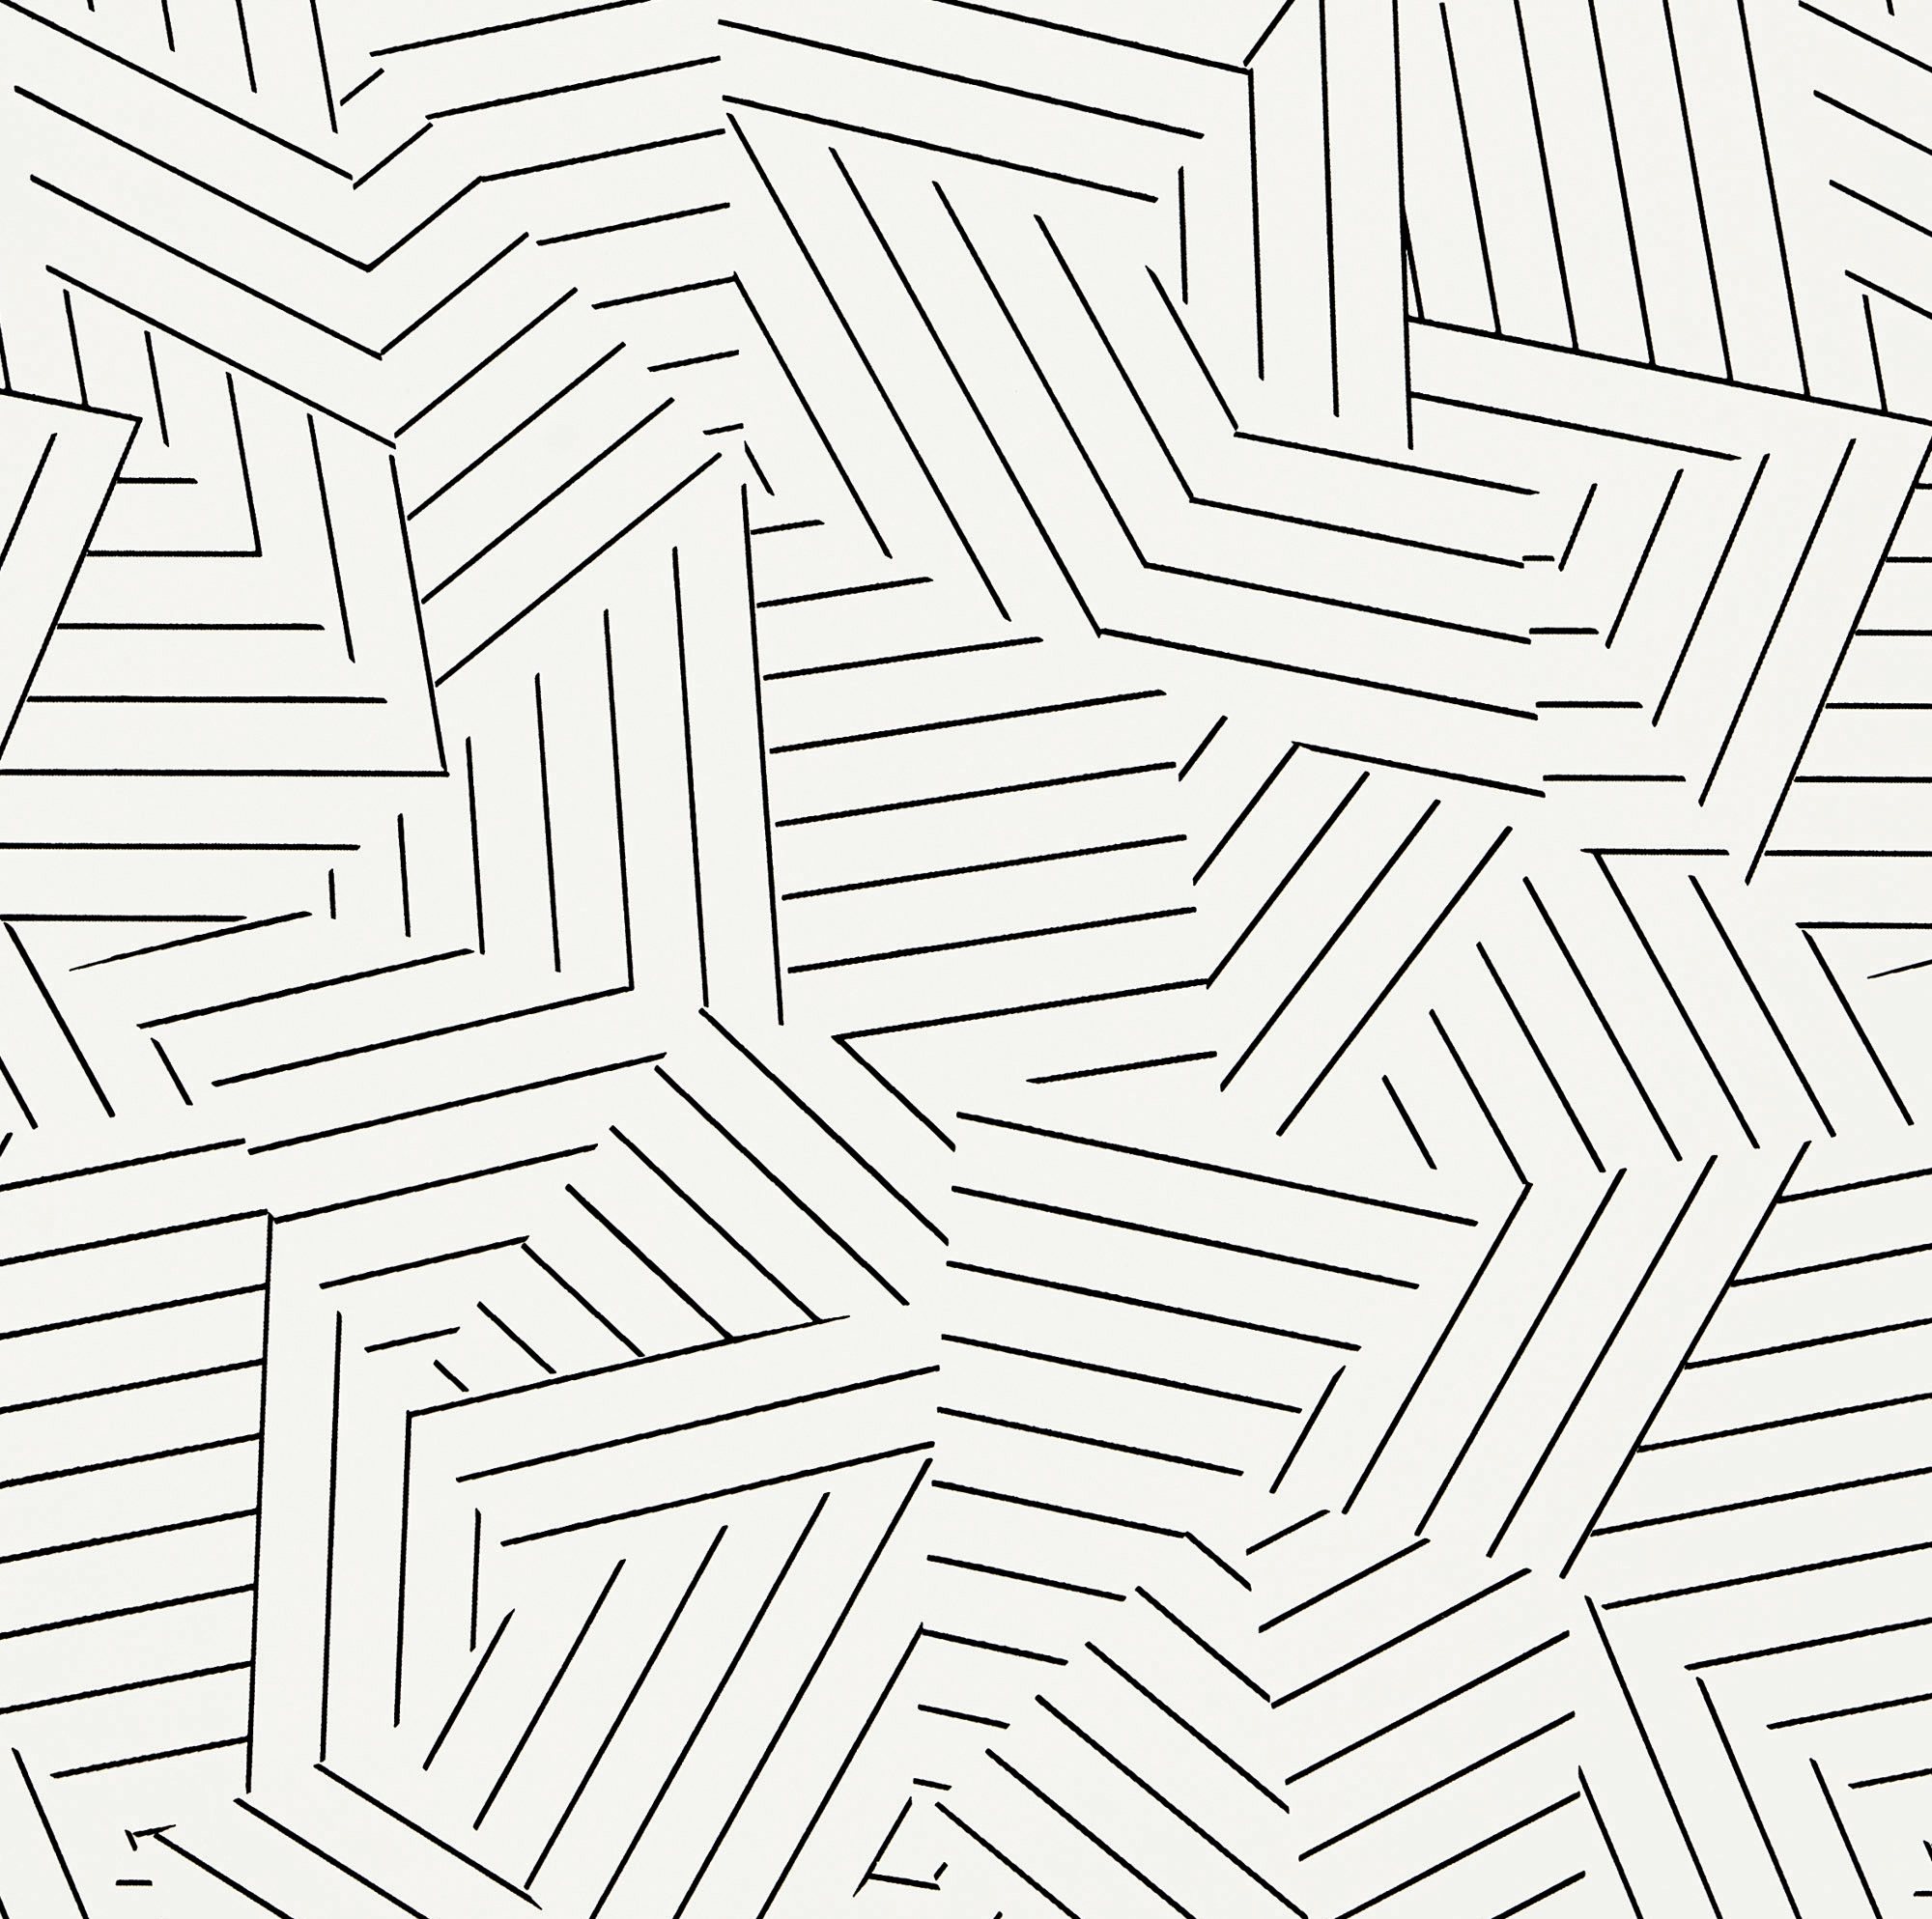 As Creation Modern Geometric Leaf Striped Pastel Wallpaper